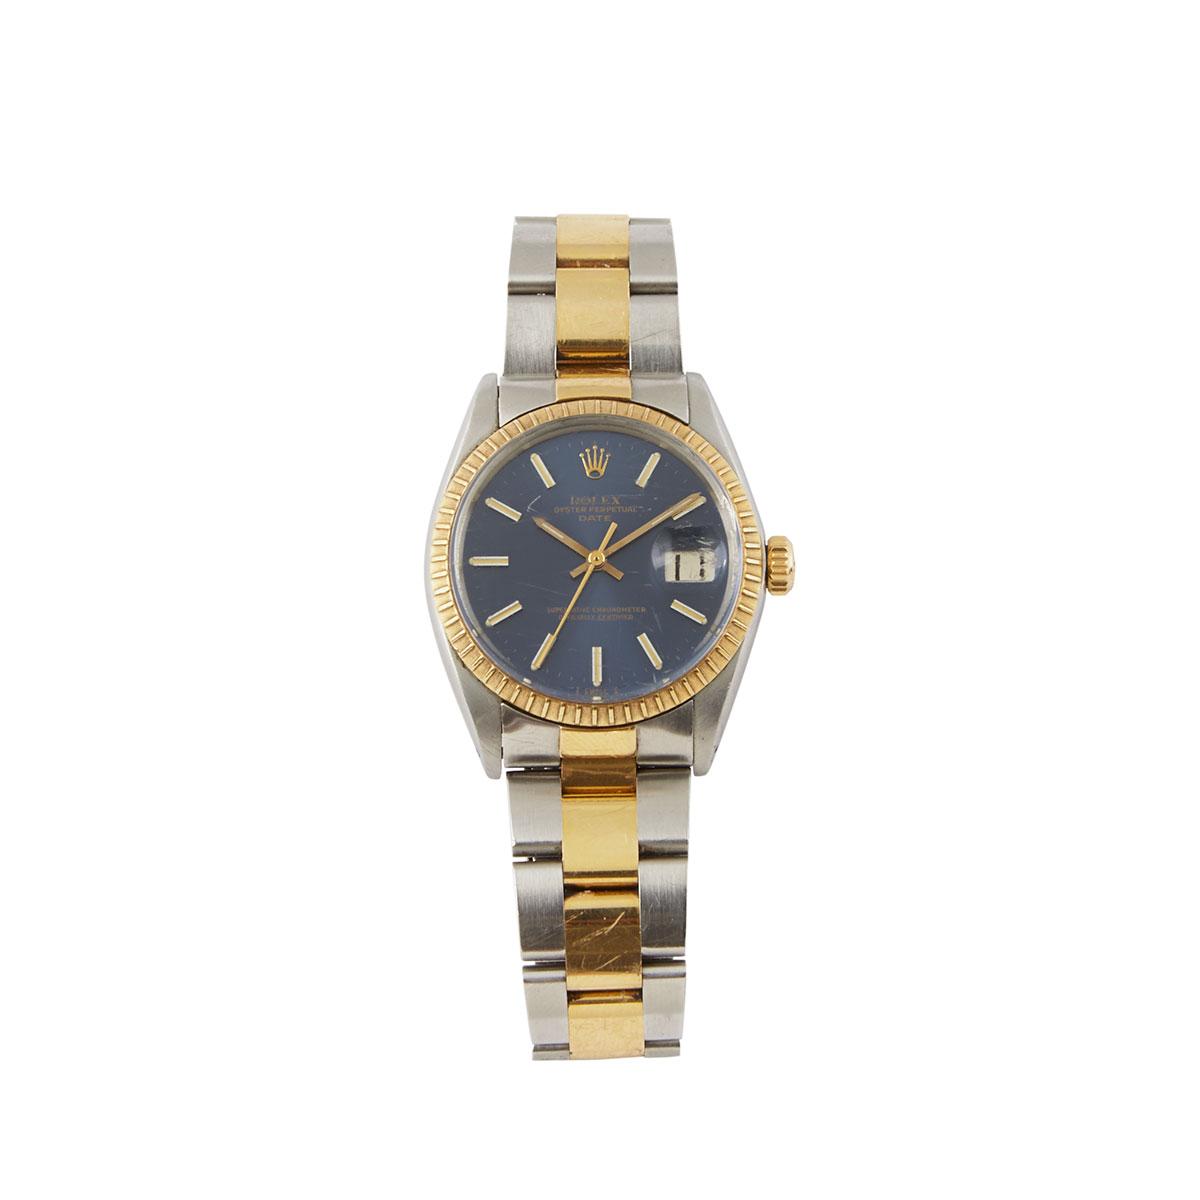 Men’s Rolex Oyster Perpetual Date Wristwatch